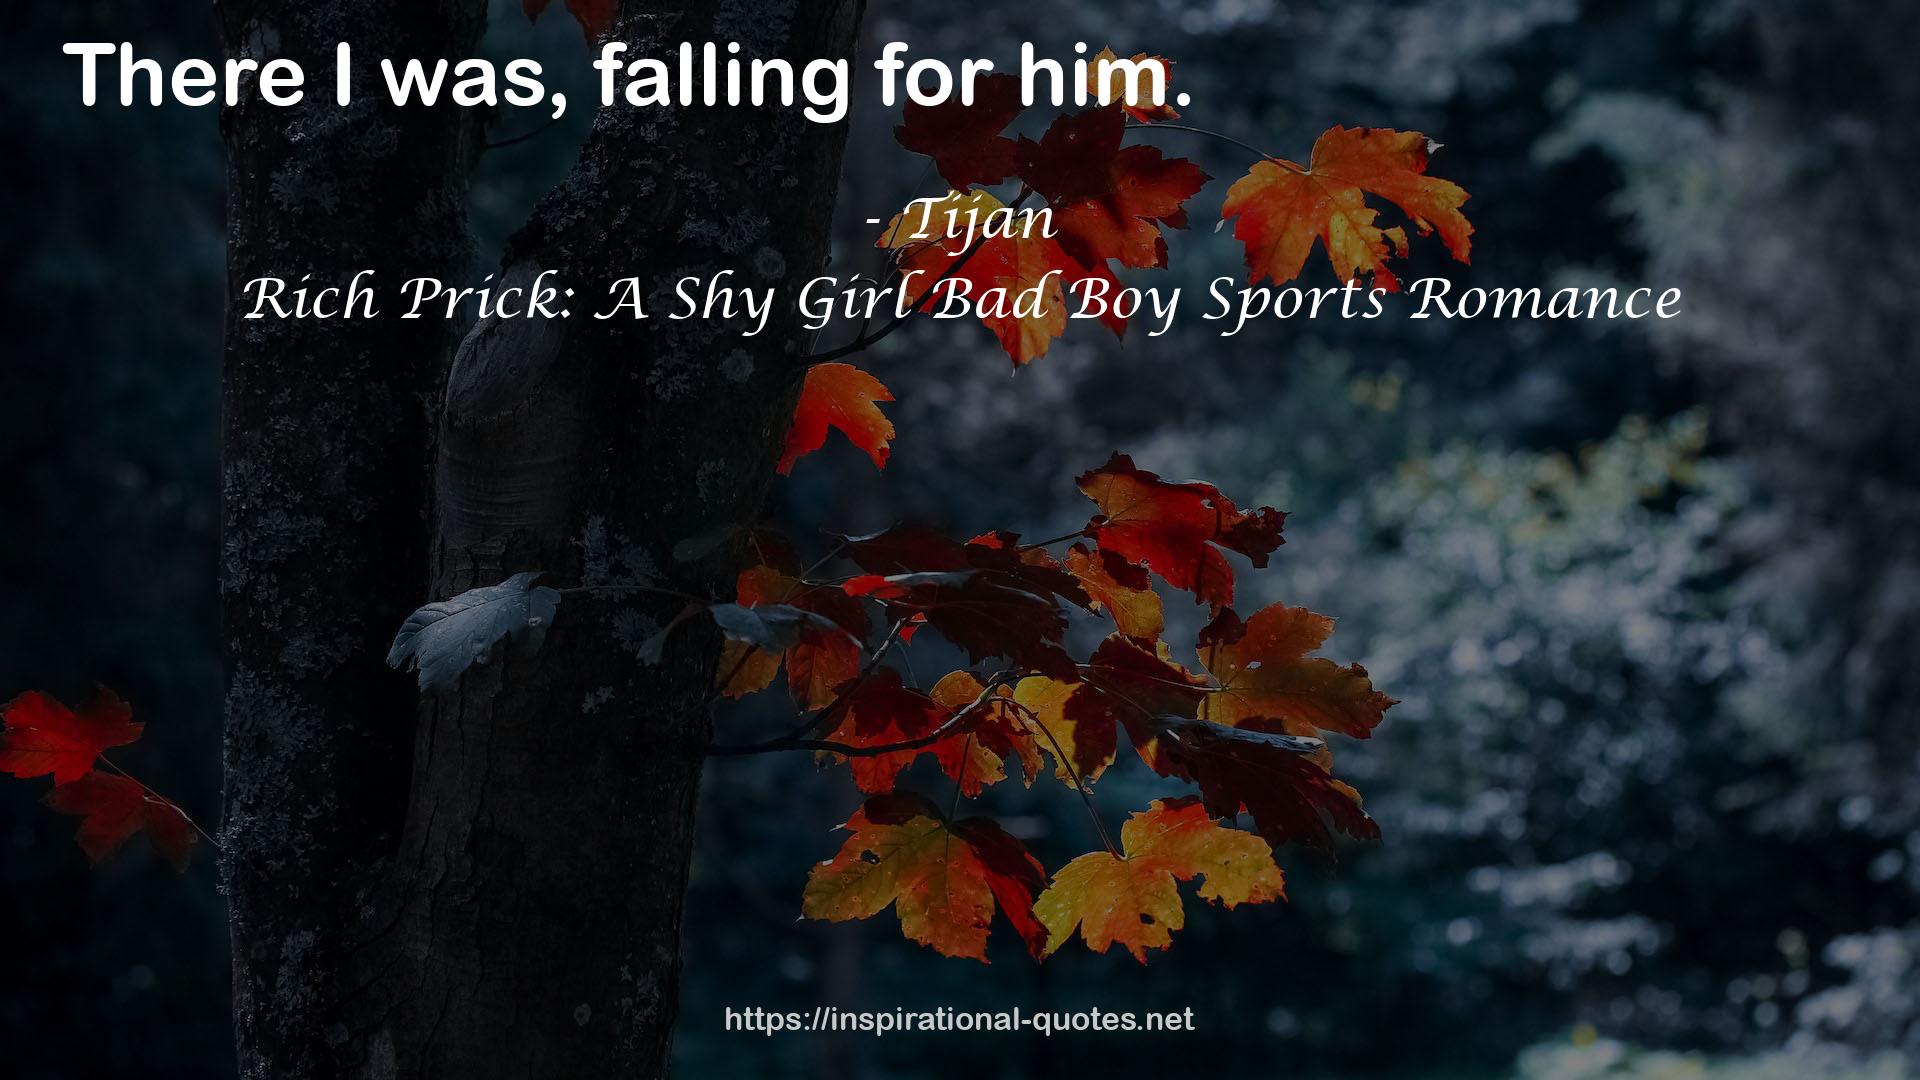 Rich Prick: A Shy Girl Bad Boy Sports Romance QUOTES